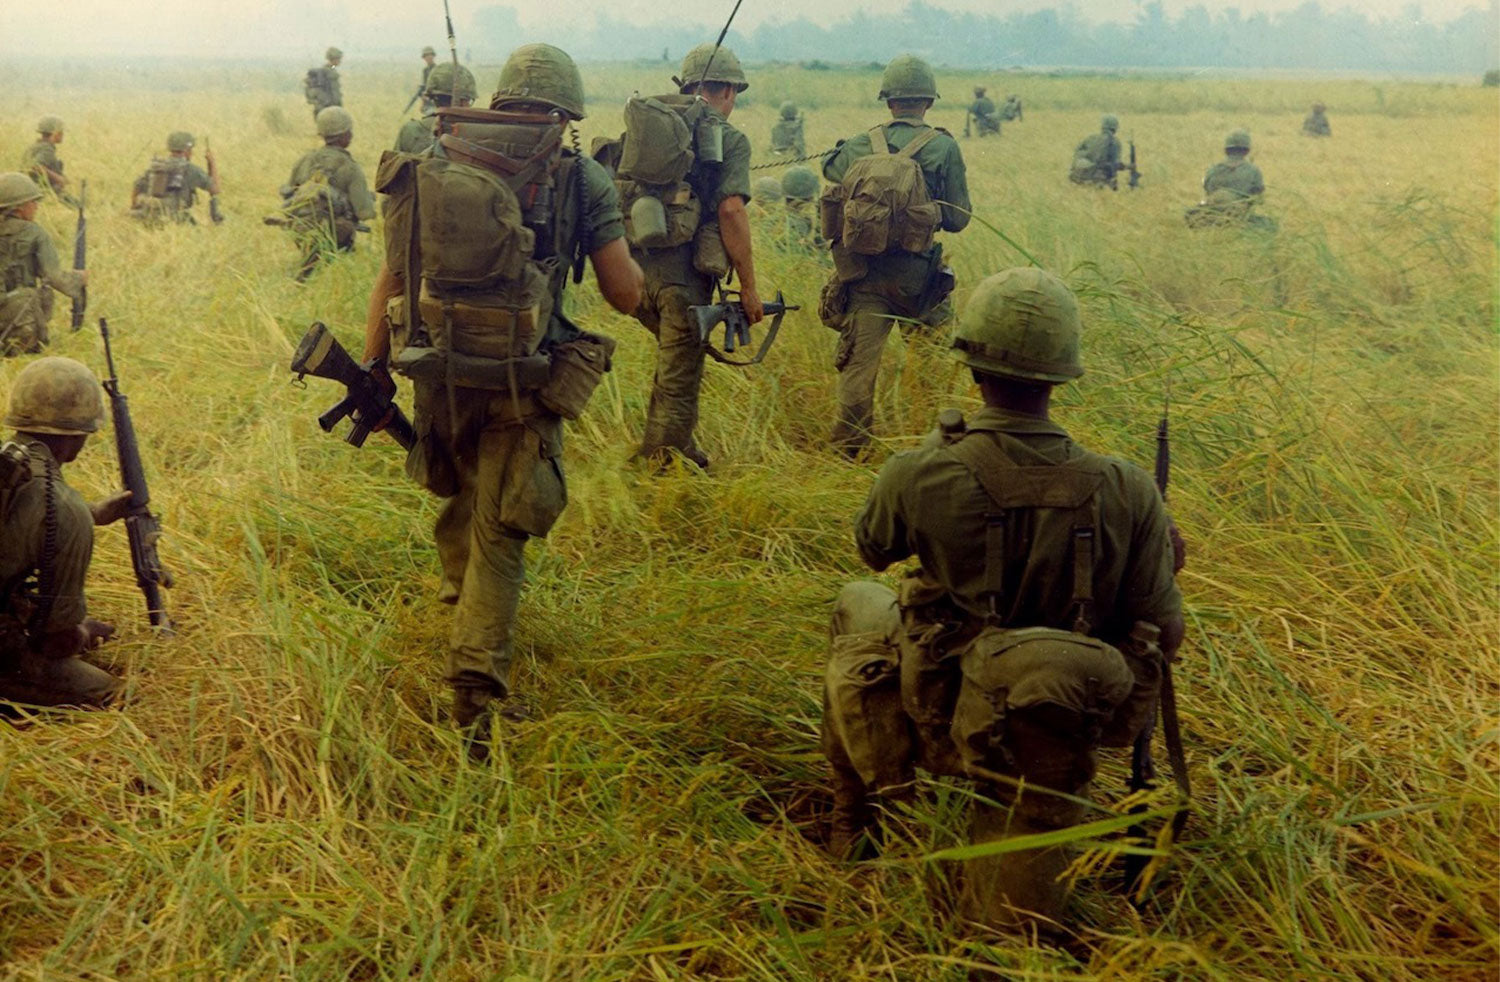 Citizen Wolf | US soldiers in Vietnam wearing Olive Drab uniforms.